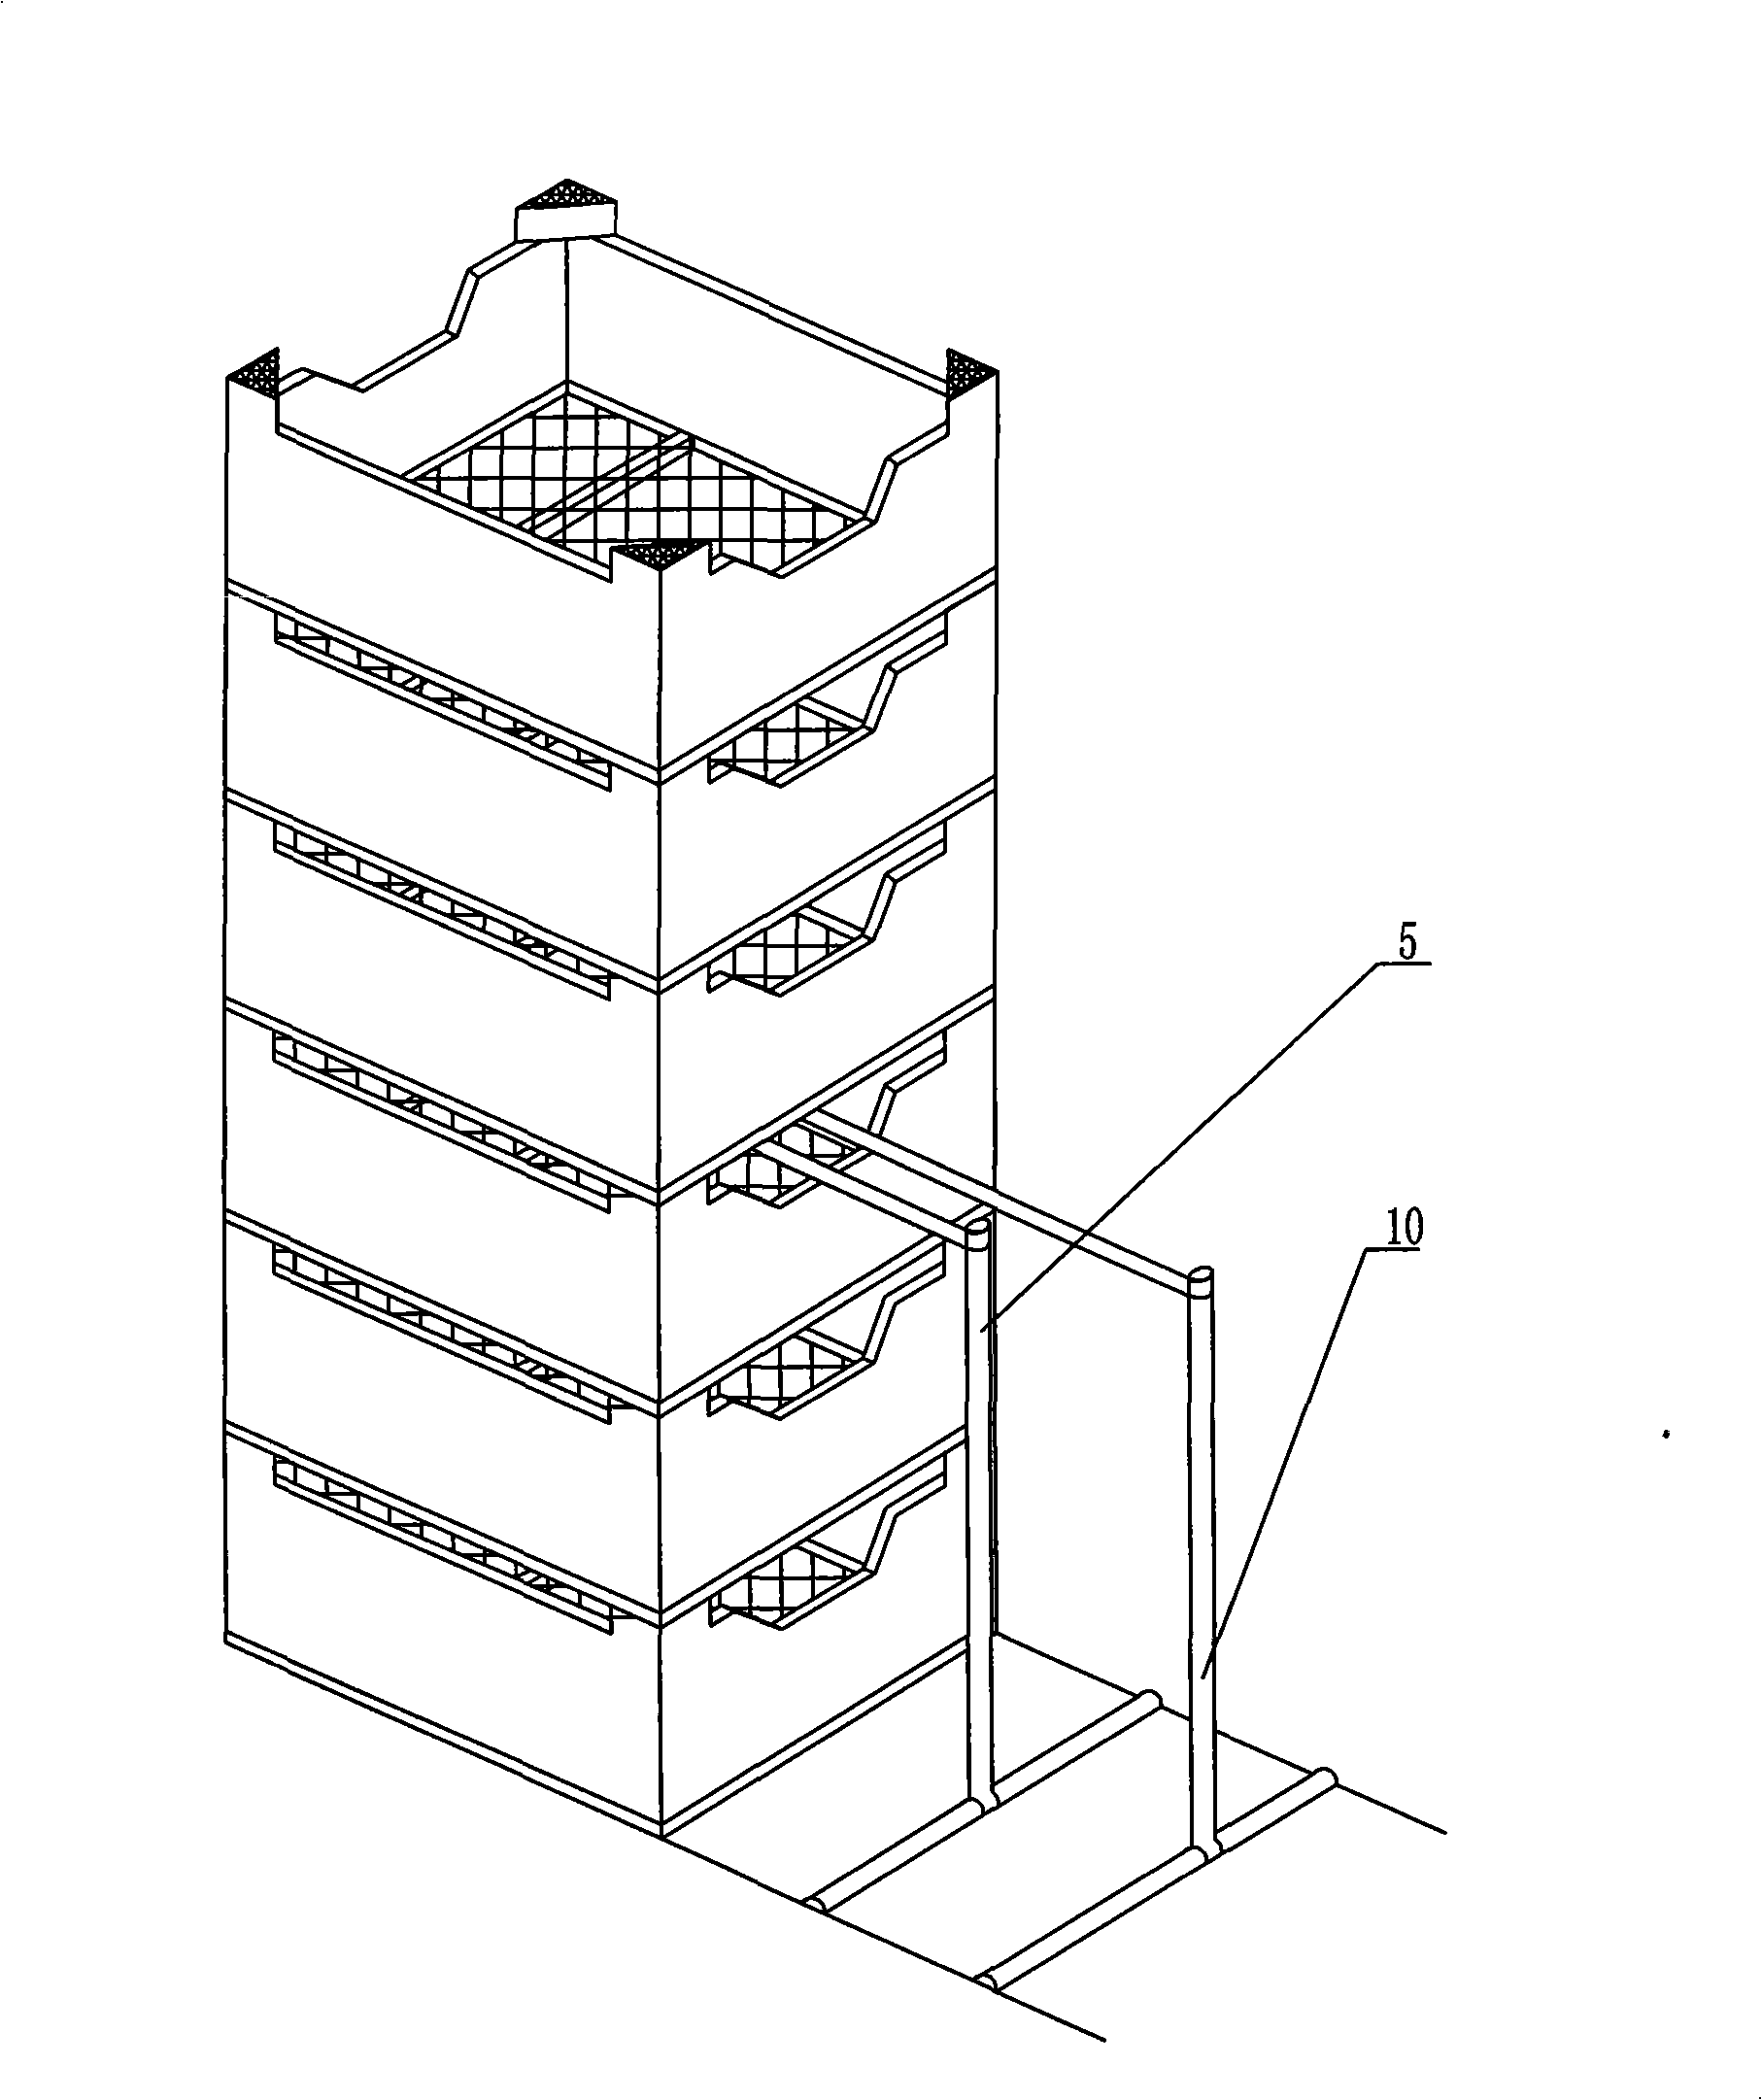 Tunnel basket type fermentation method for culture medium of edible fungus